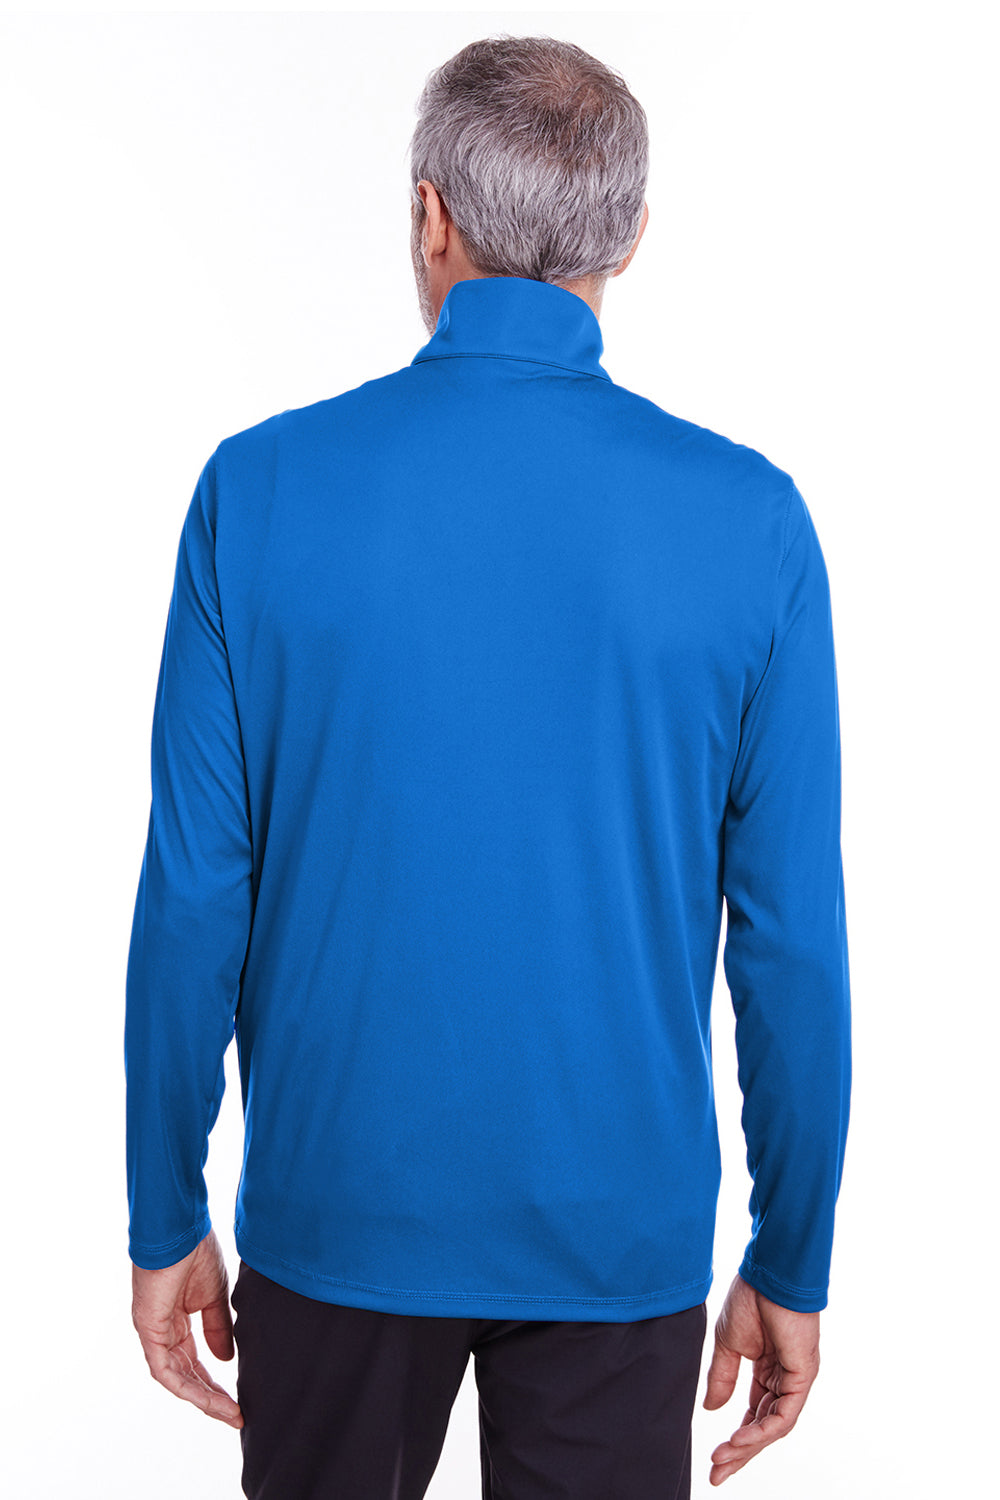 Puma 596807 Mens Icon Performance Moisture Wicking 1/4 Zip Sweatshirt Royal Blue Back